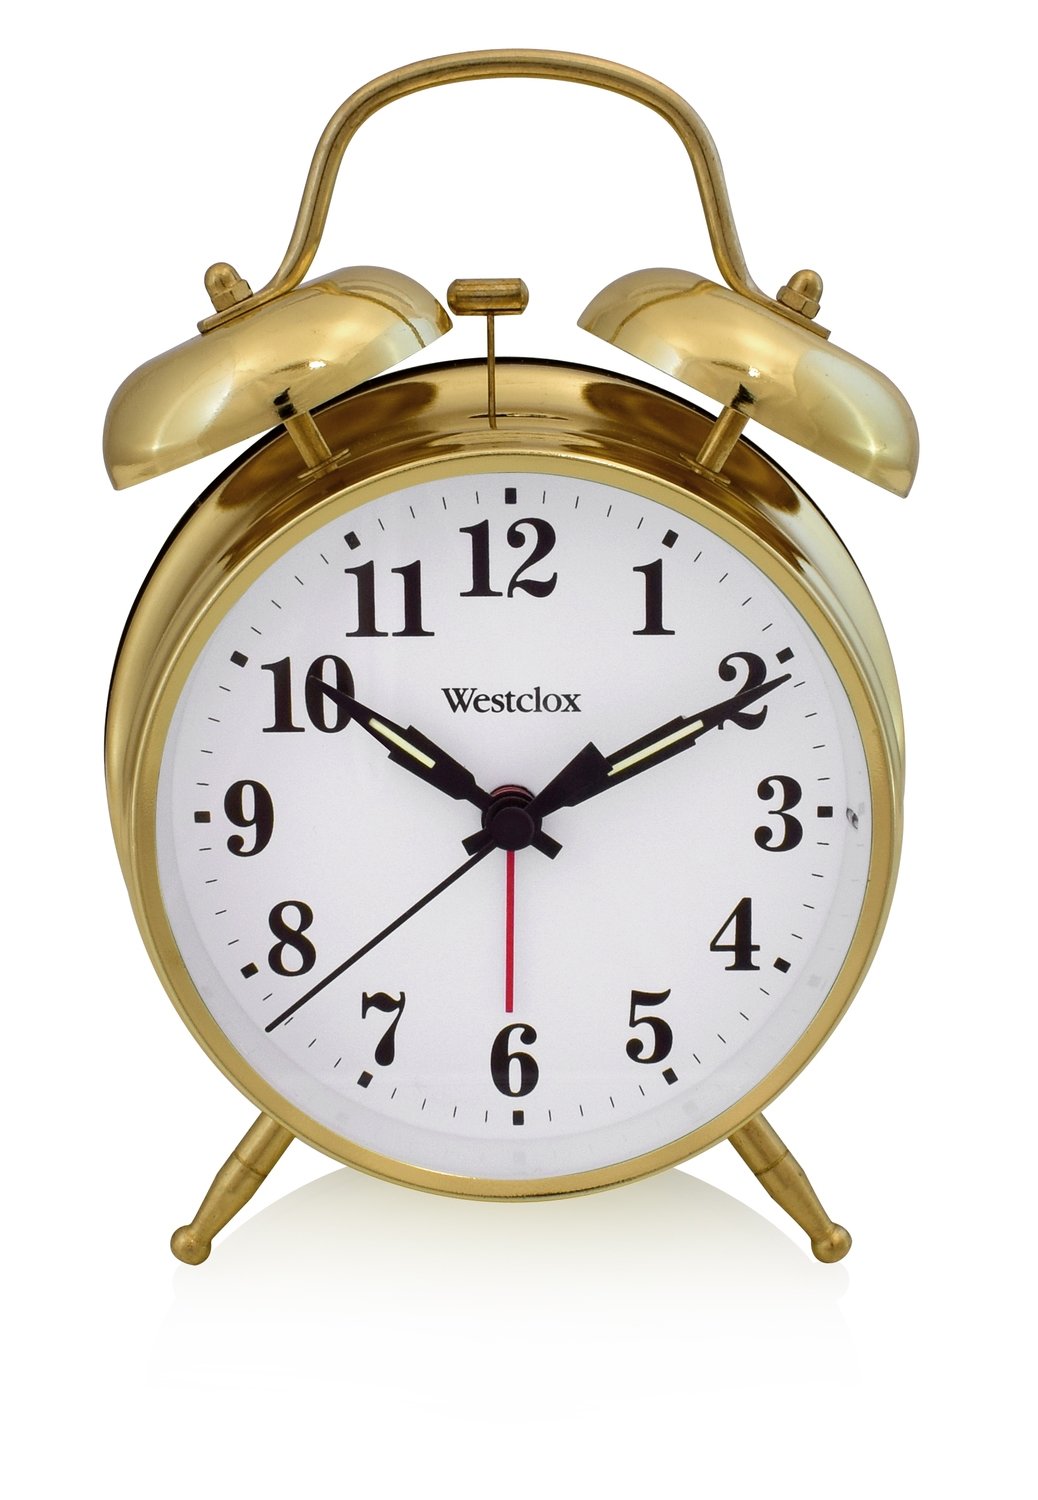 Westclox Twin Bell Battery Alarm Clock 3-1/2" Face Quartz Movement #70010 